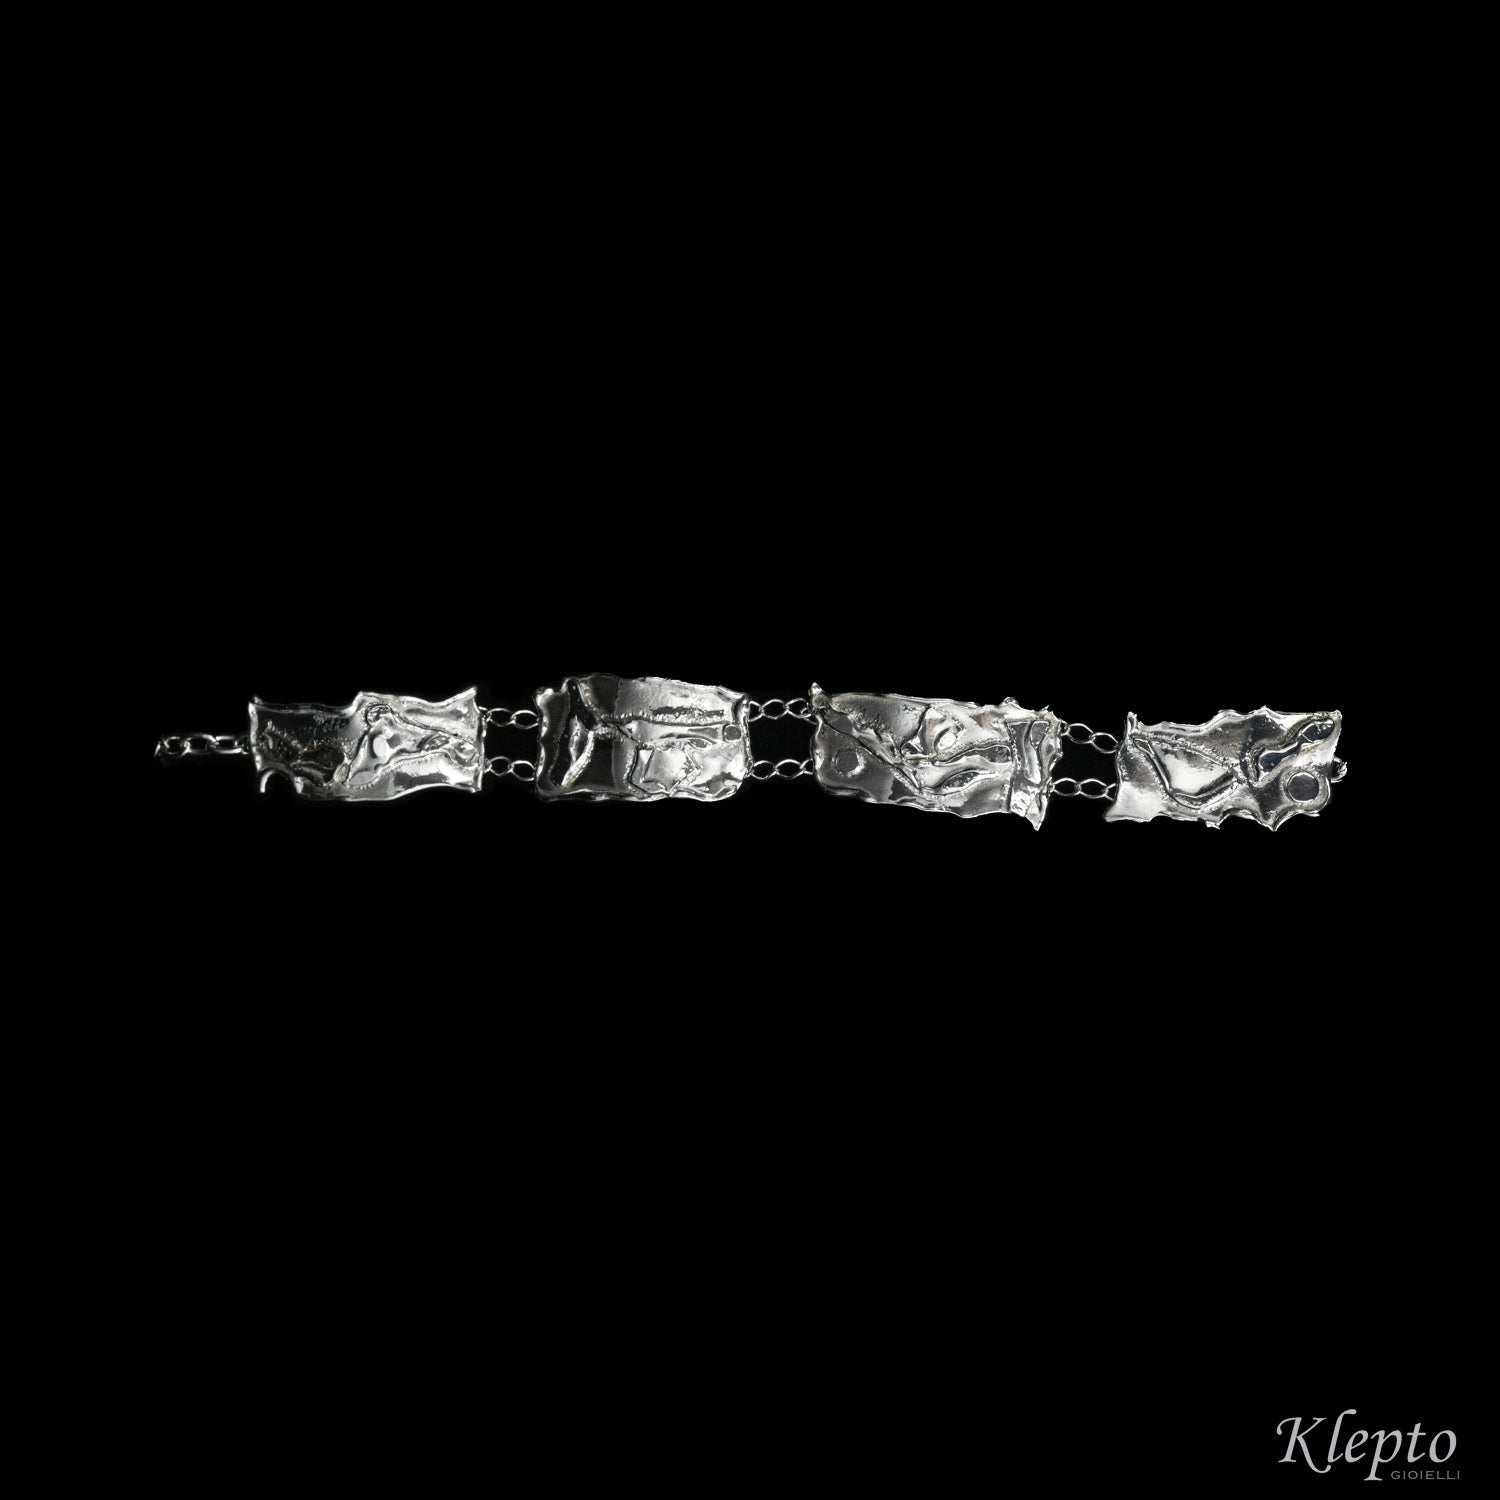 Silver Silnova® bracelet with flame fused segments